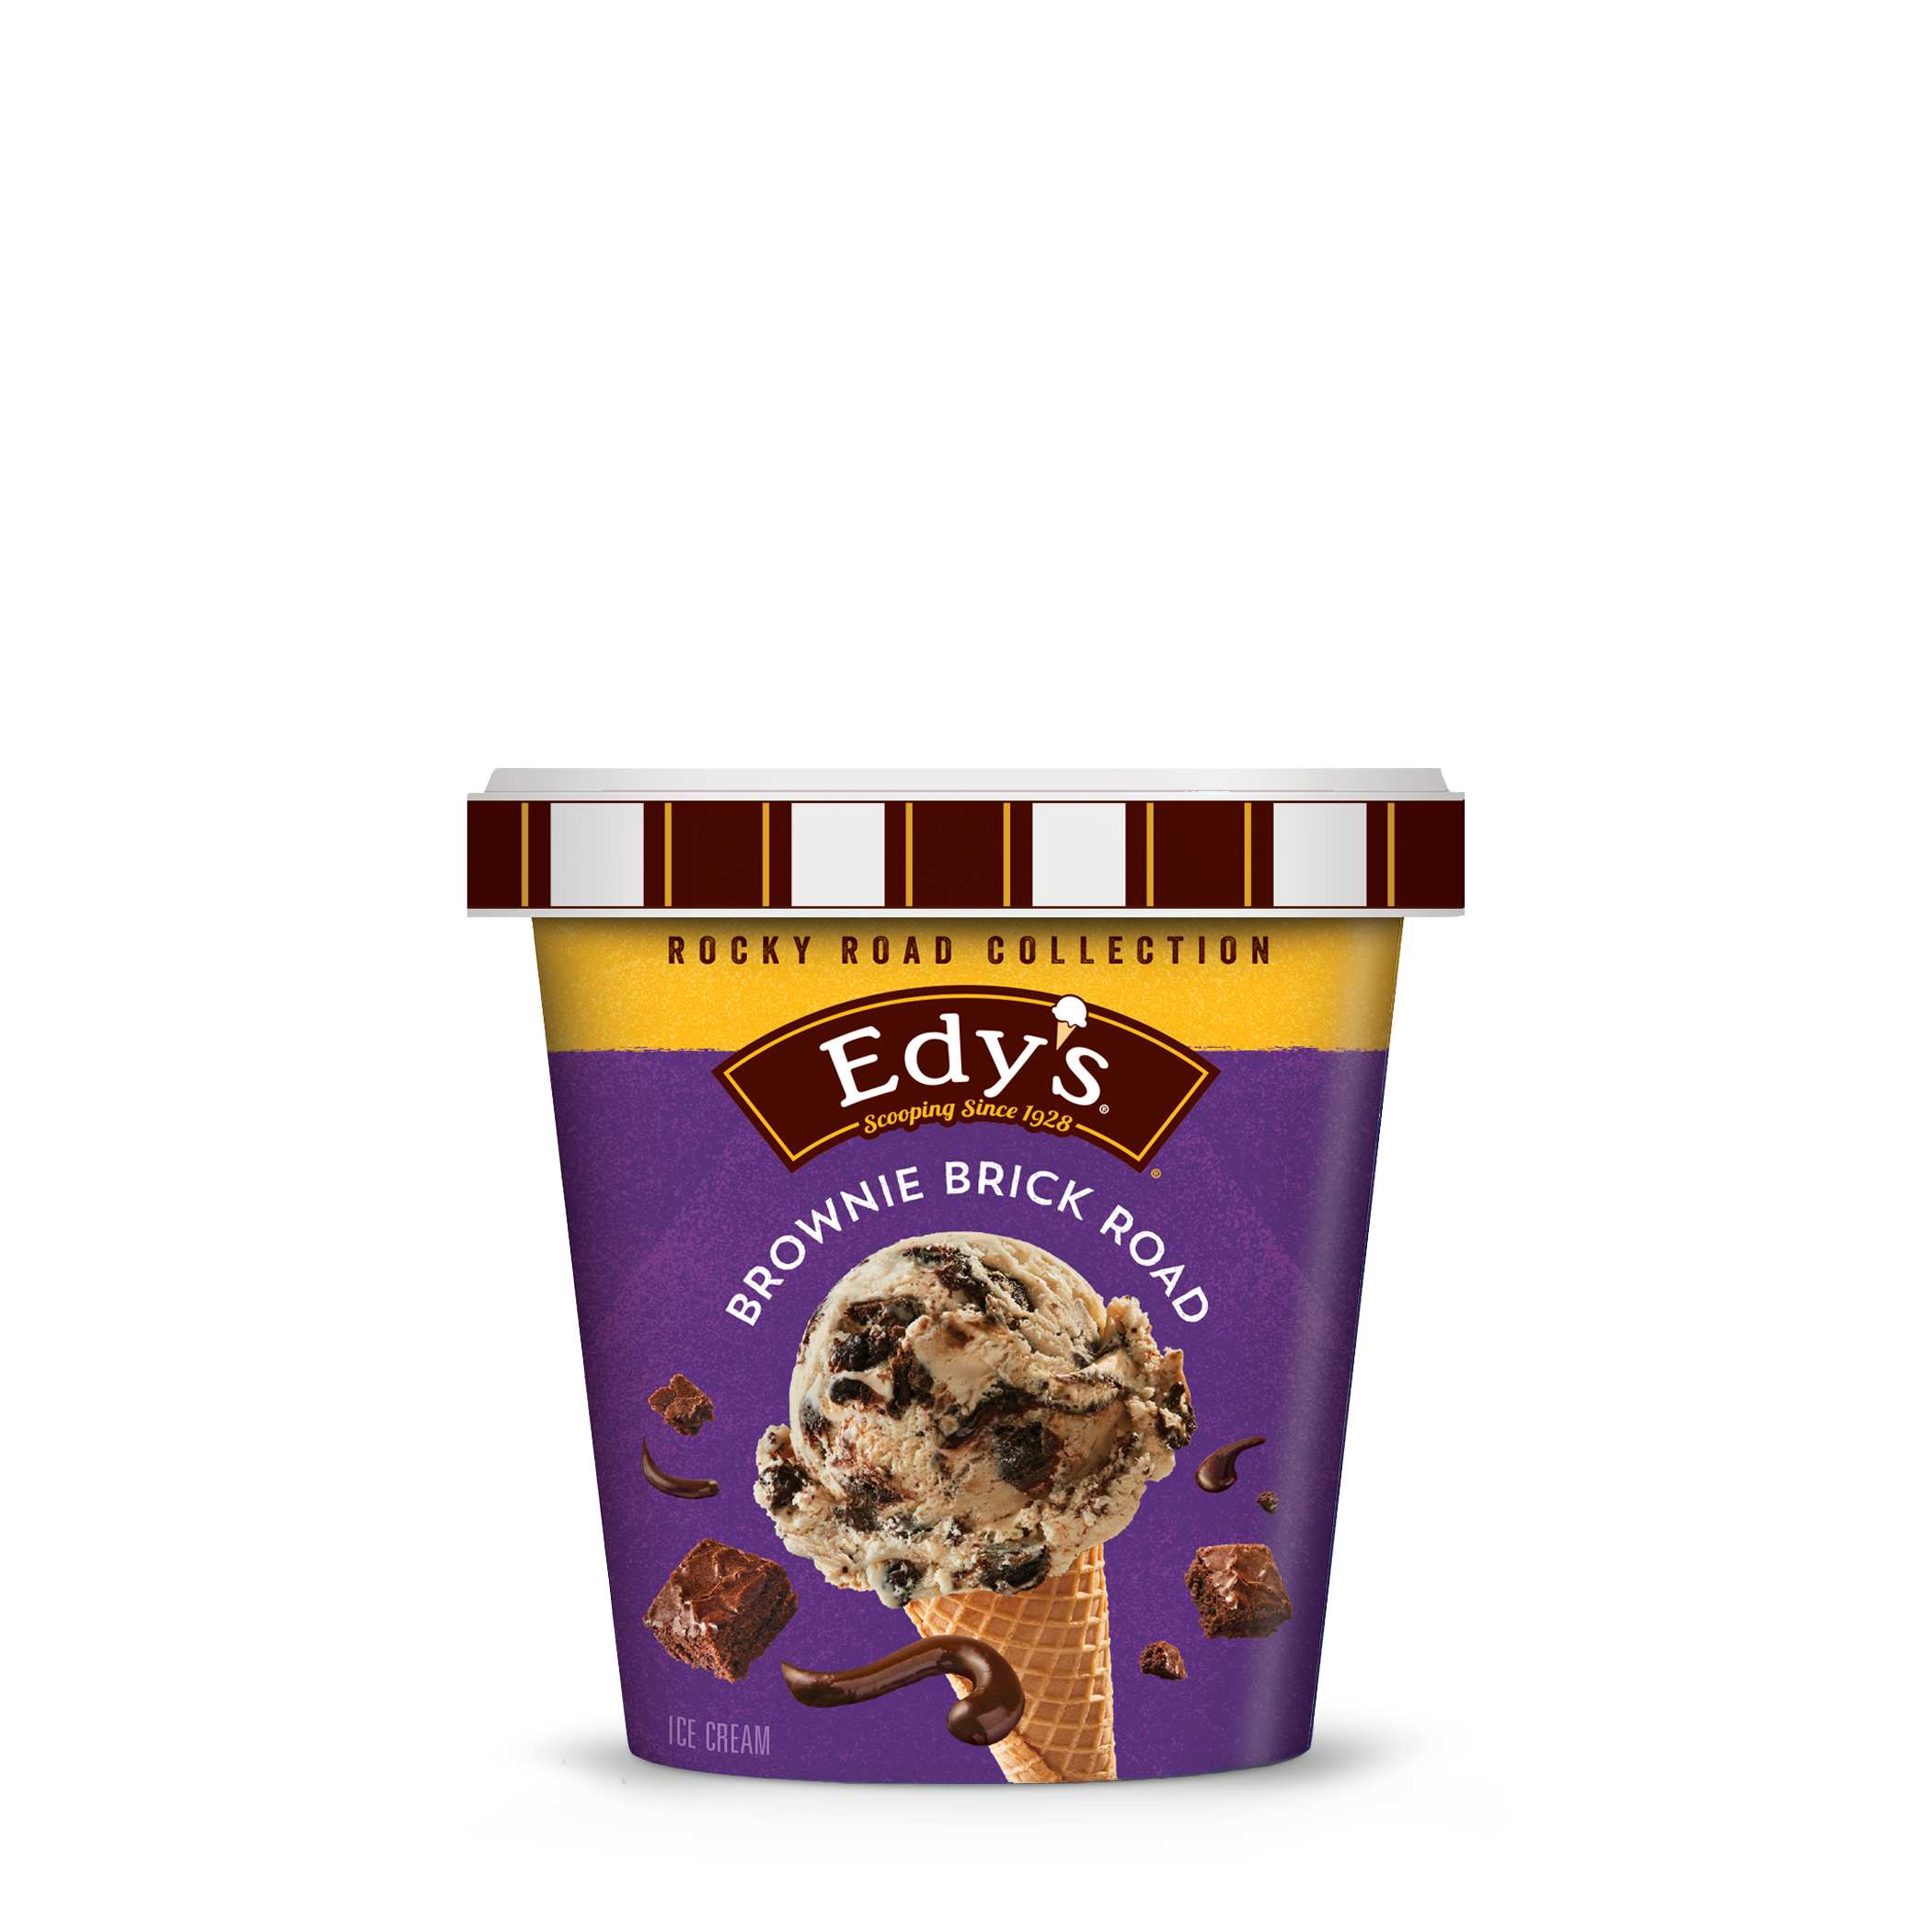 Carton of Edy's Brownie Brick Road ice cream